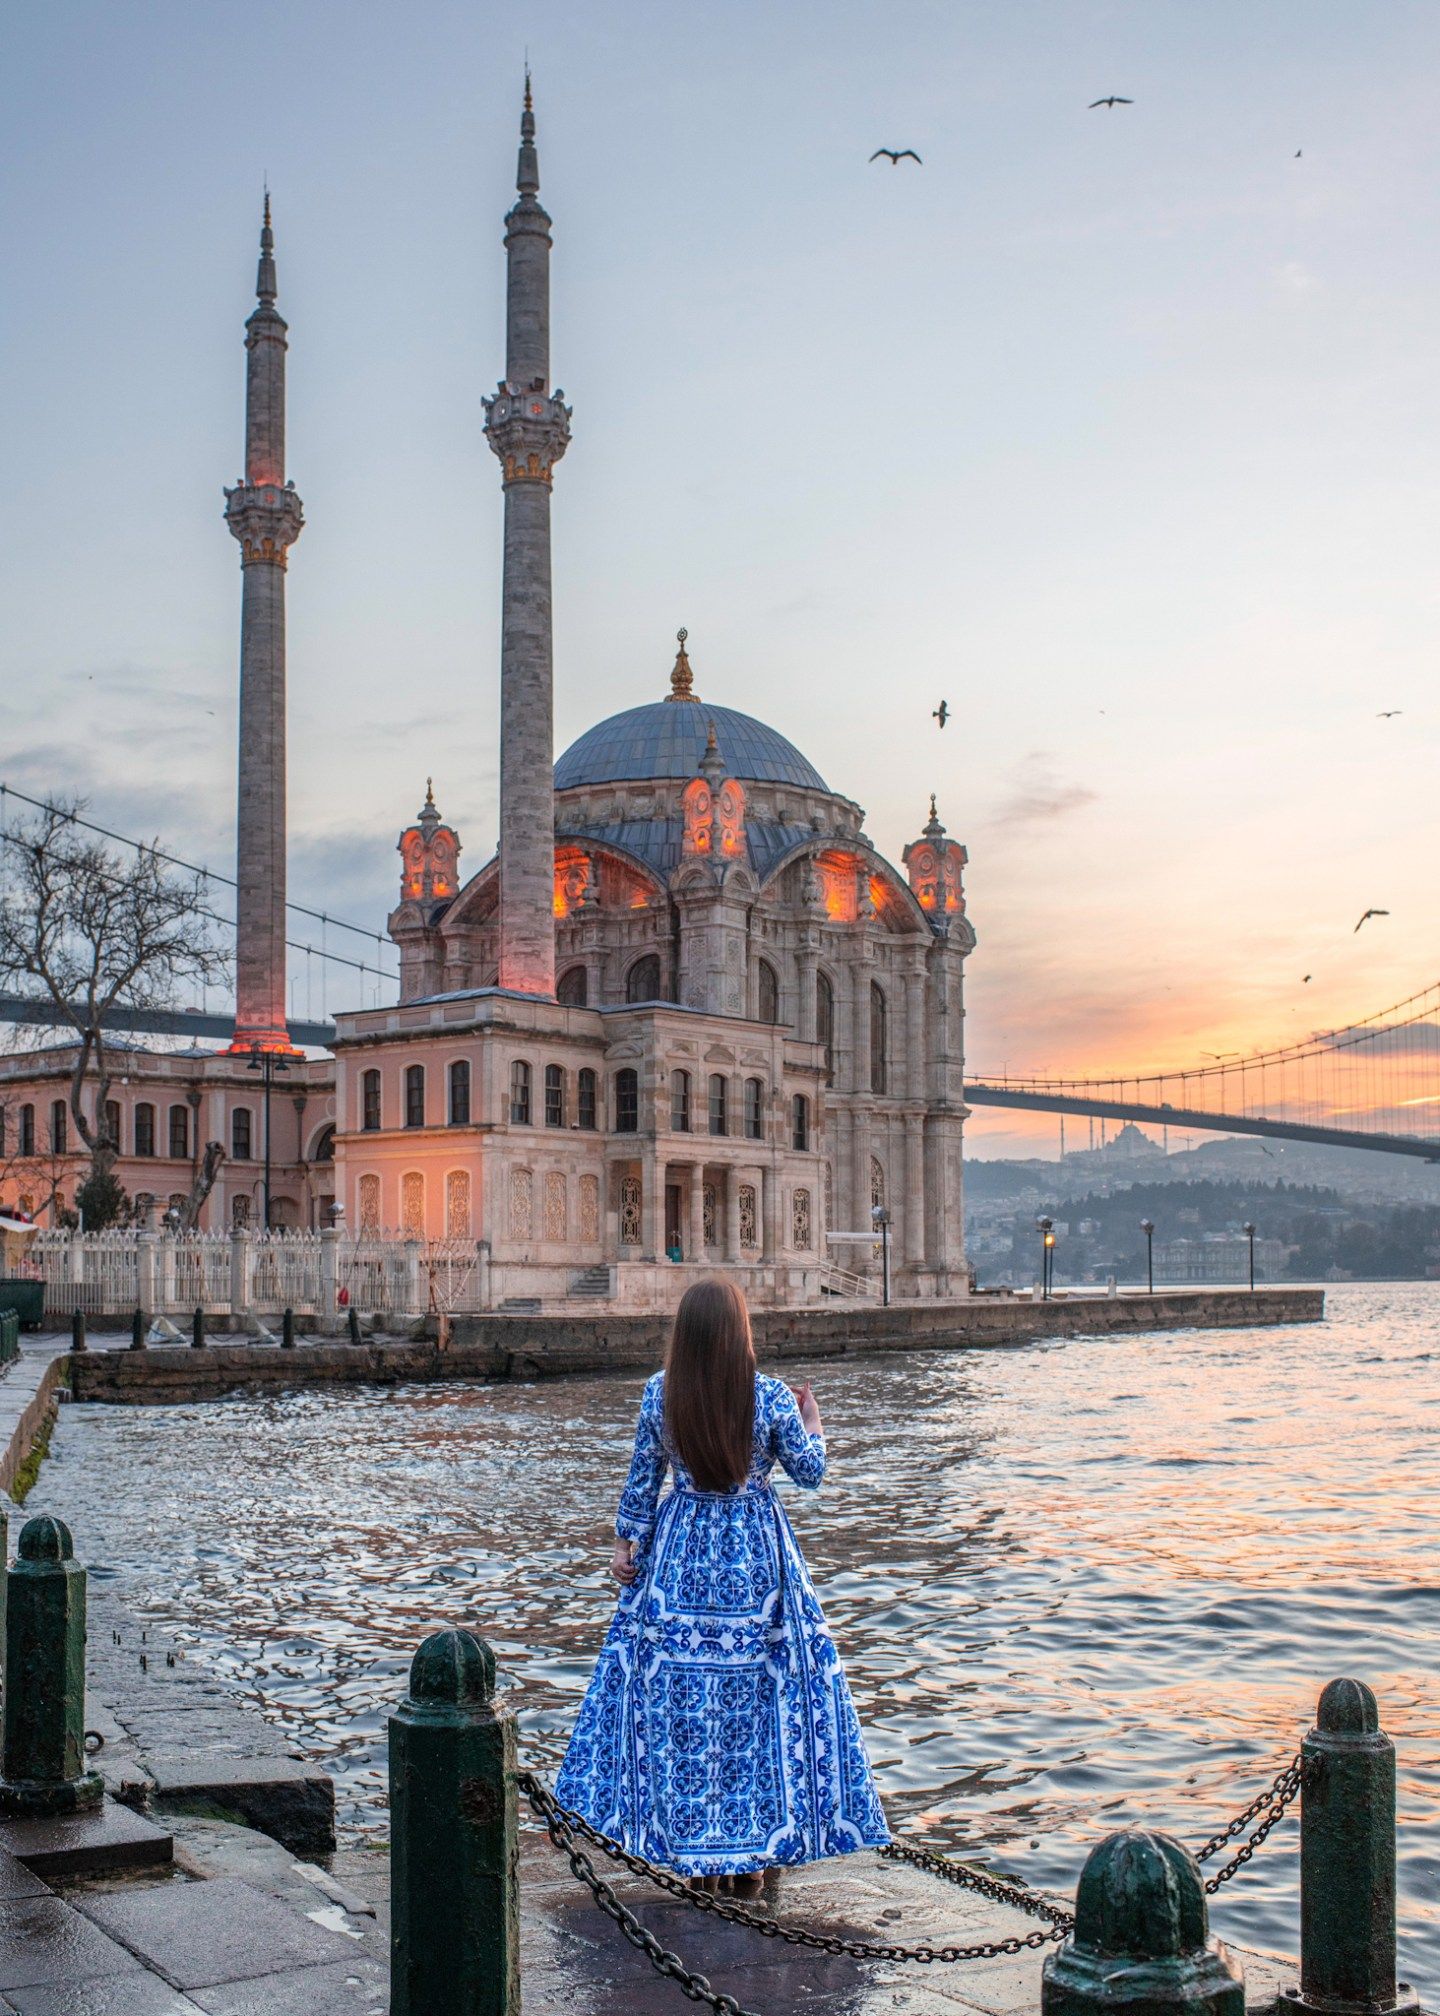   Turkey, Istanbul